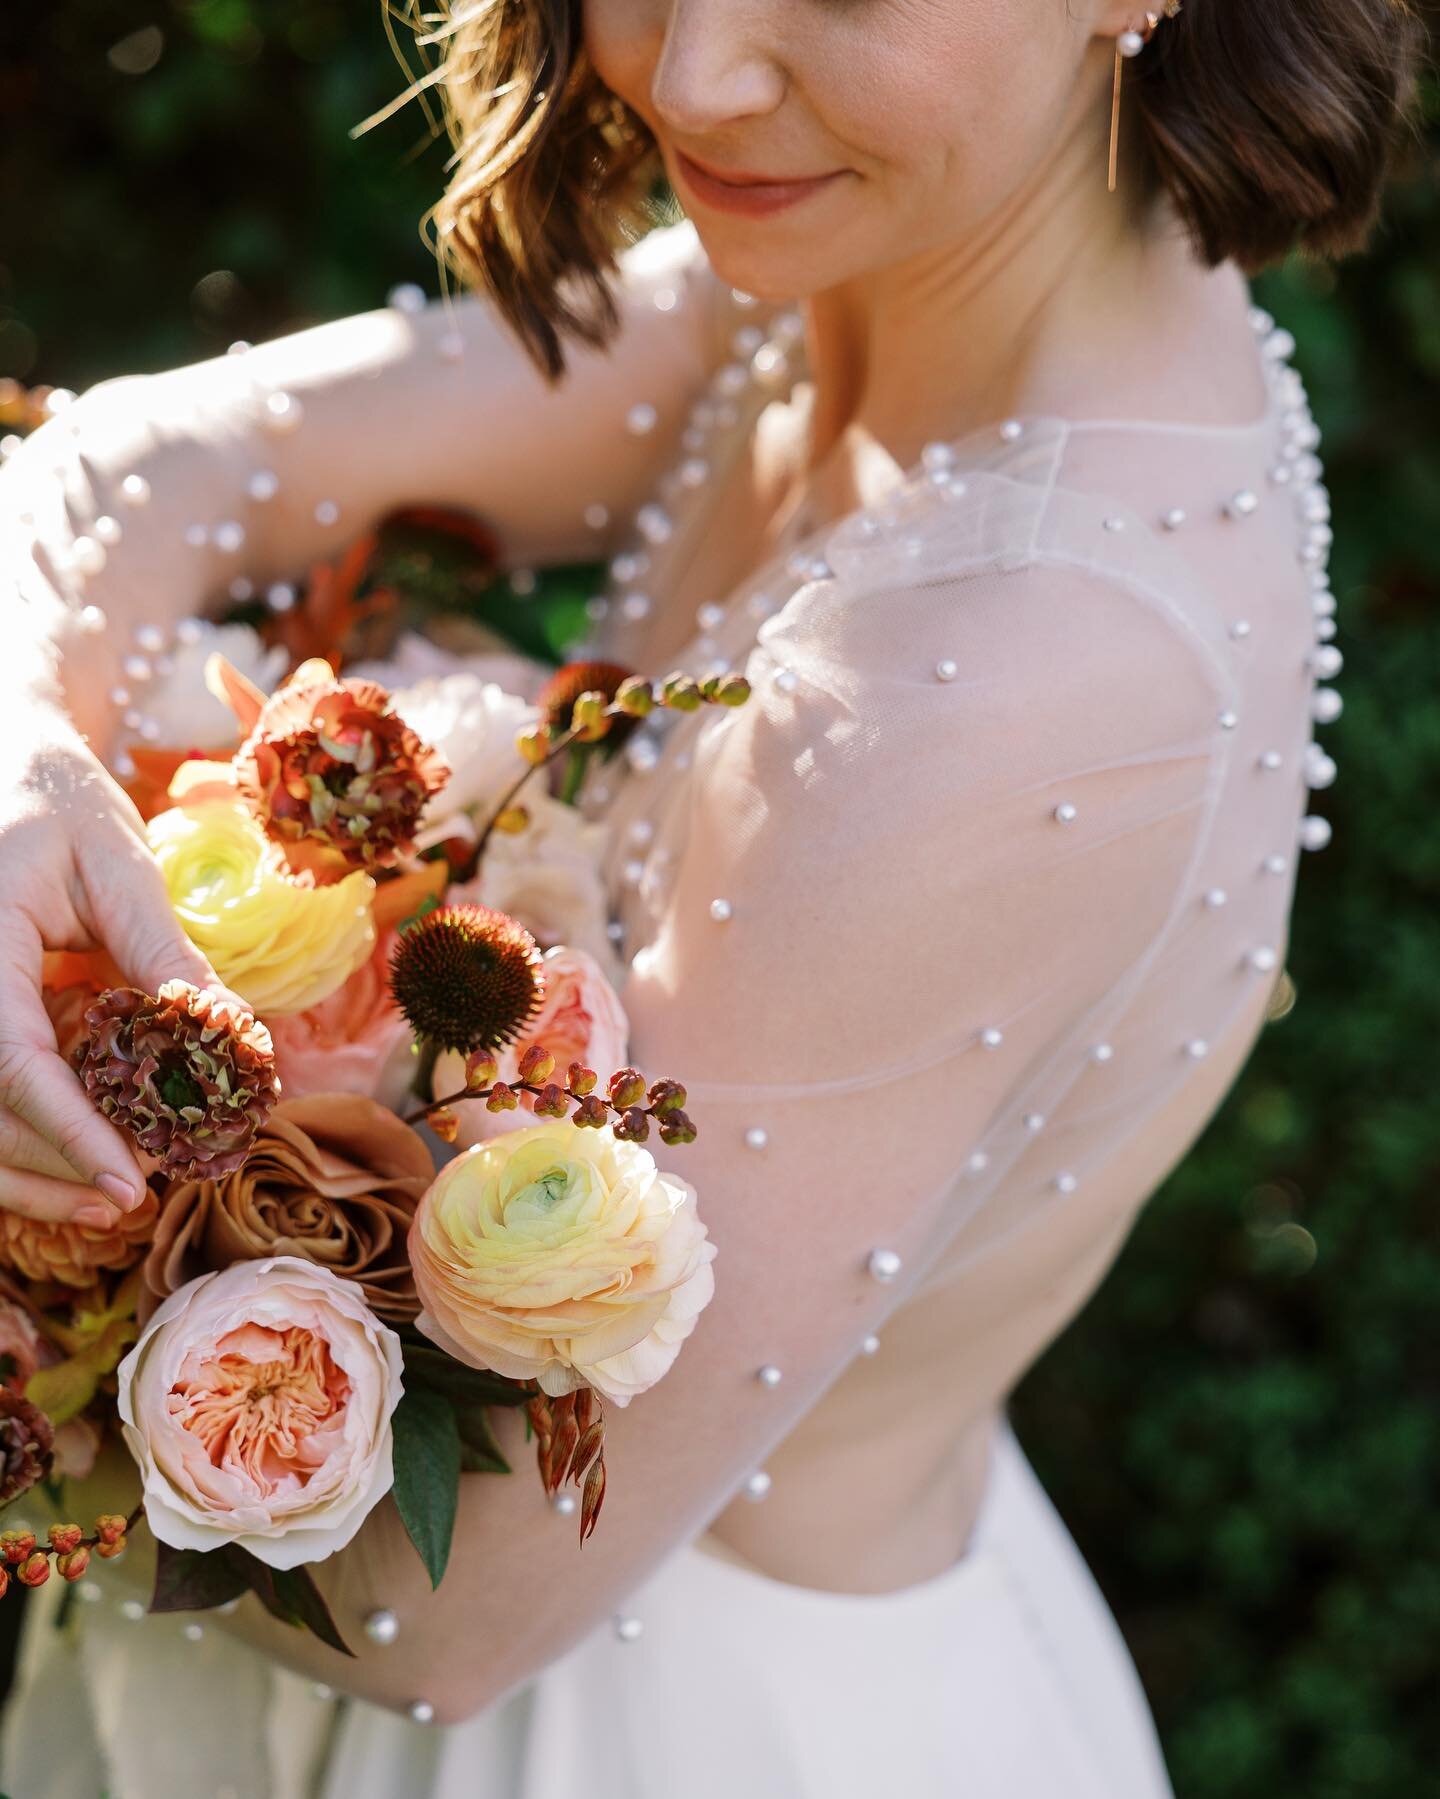 Bridal bouquet with autumn tones and lots of beautiful textures 🍂🧡🍂🧡🍂🧡
.
.
.
.
.
.
Photo: @sarah_anne_photo 
Florals: @floraldesignbymaria 
Venue: @fremont_foundry